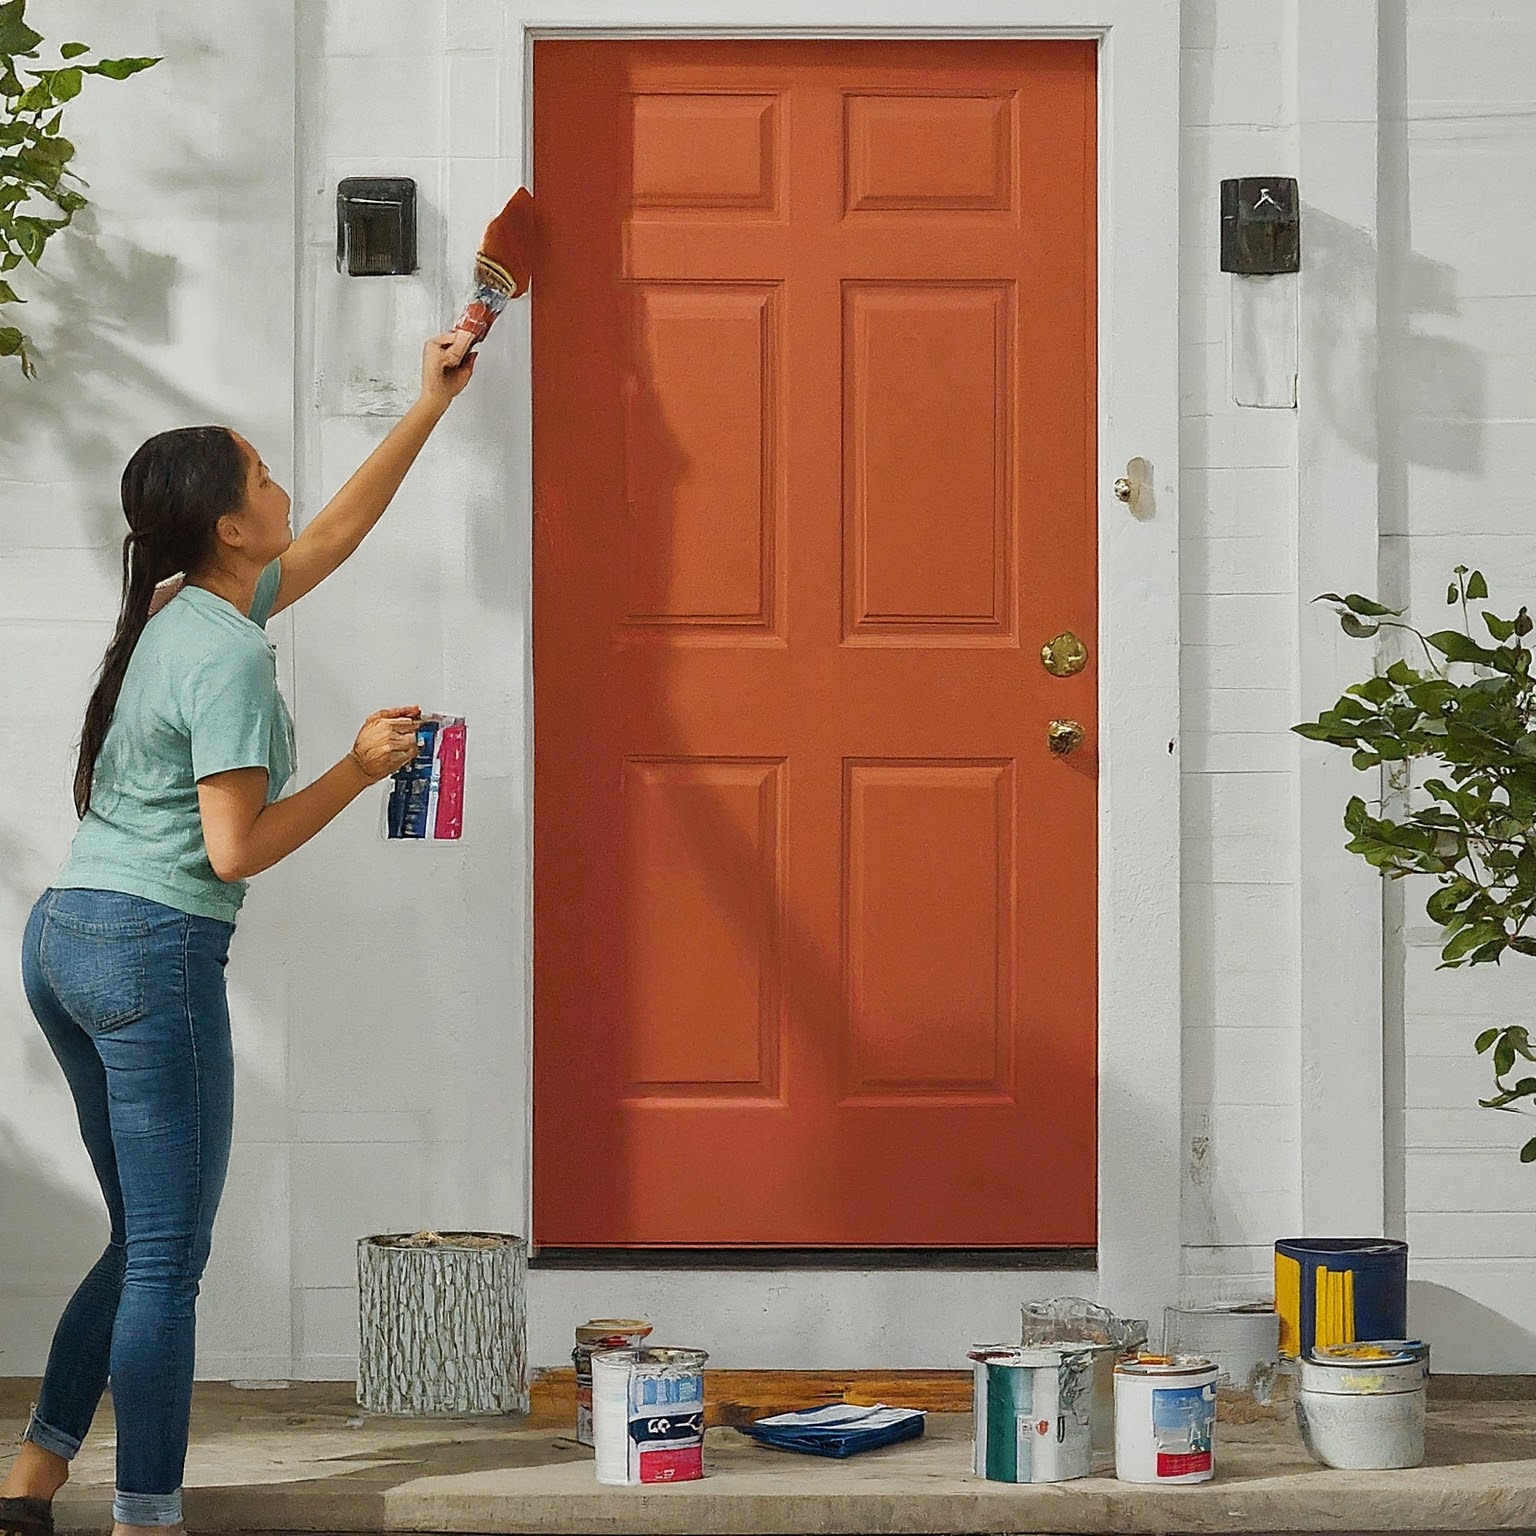 Handyman Hack in action lady painting a door